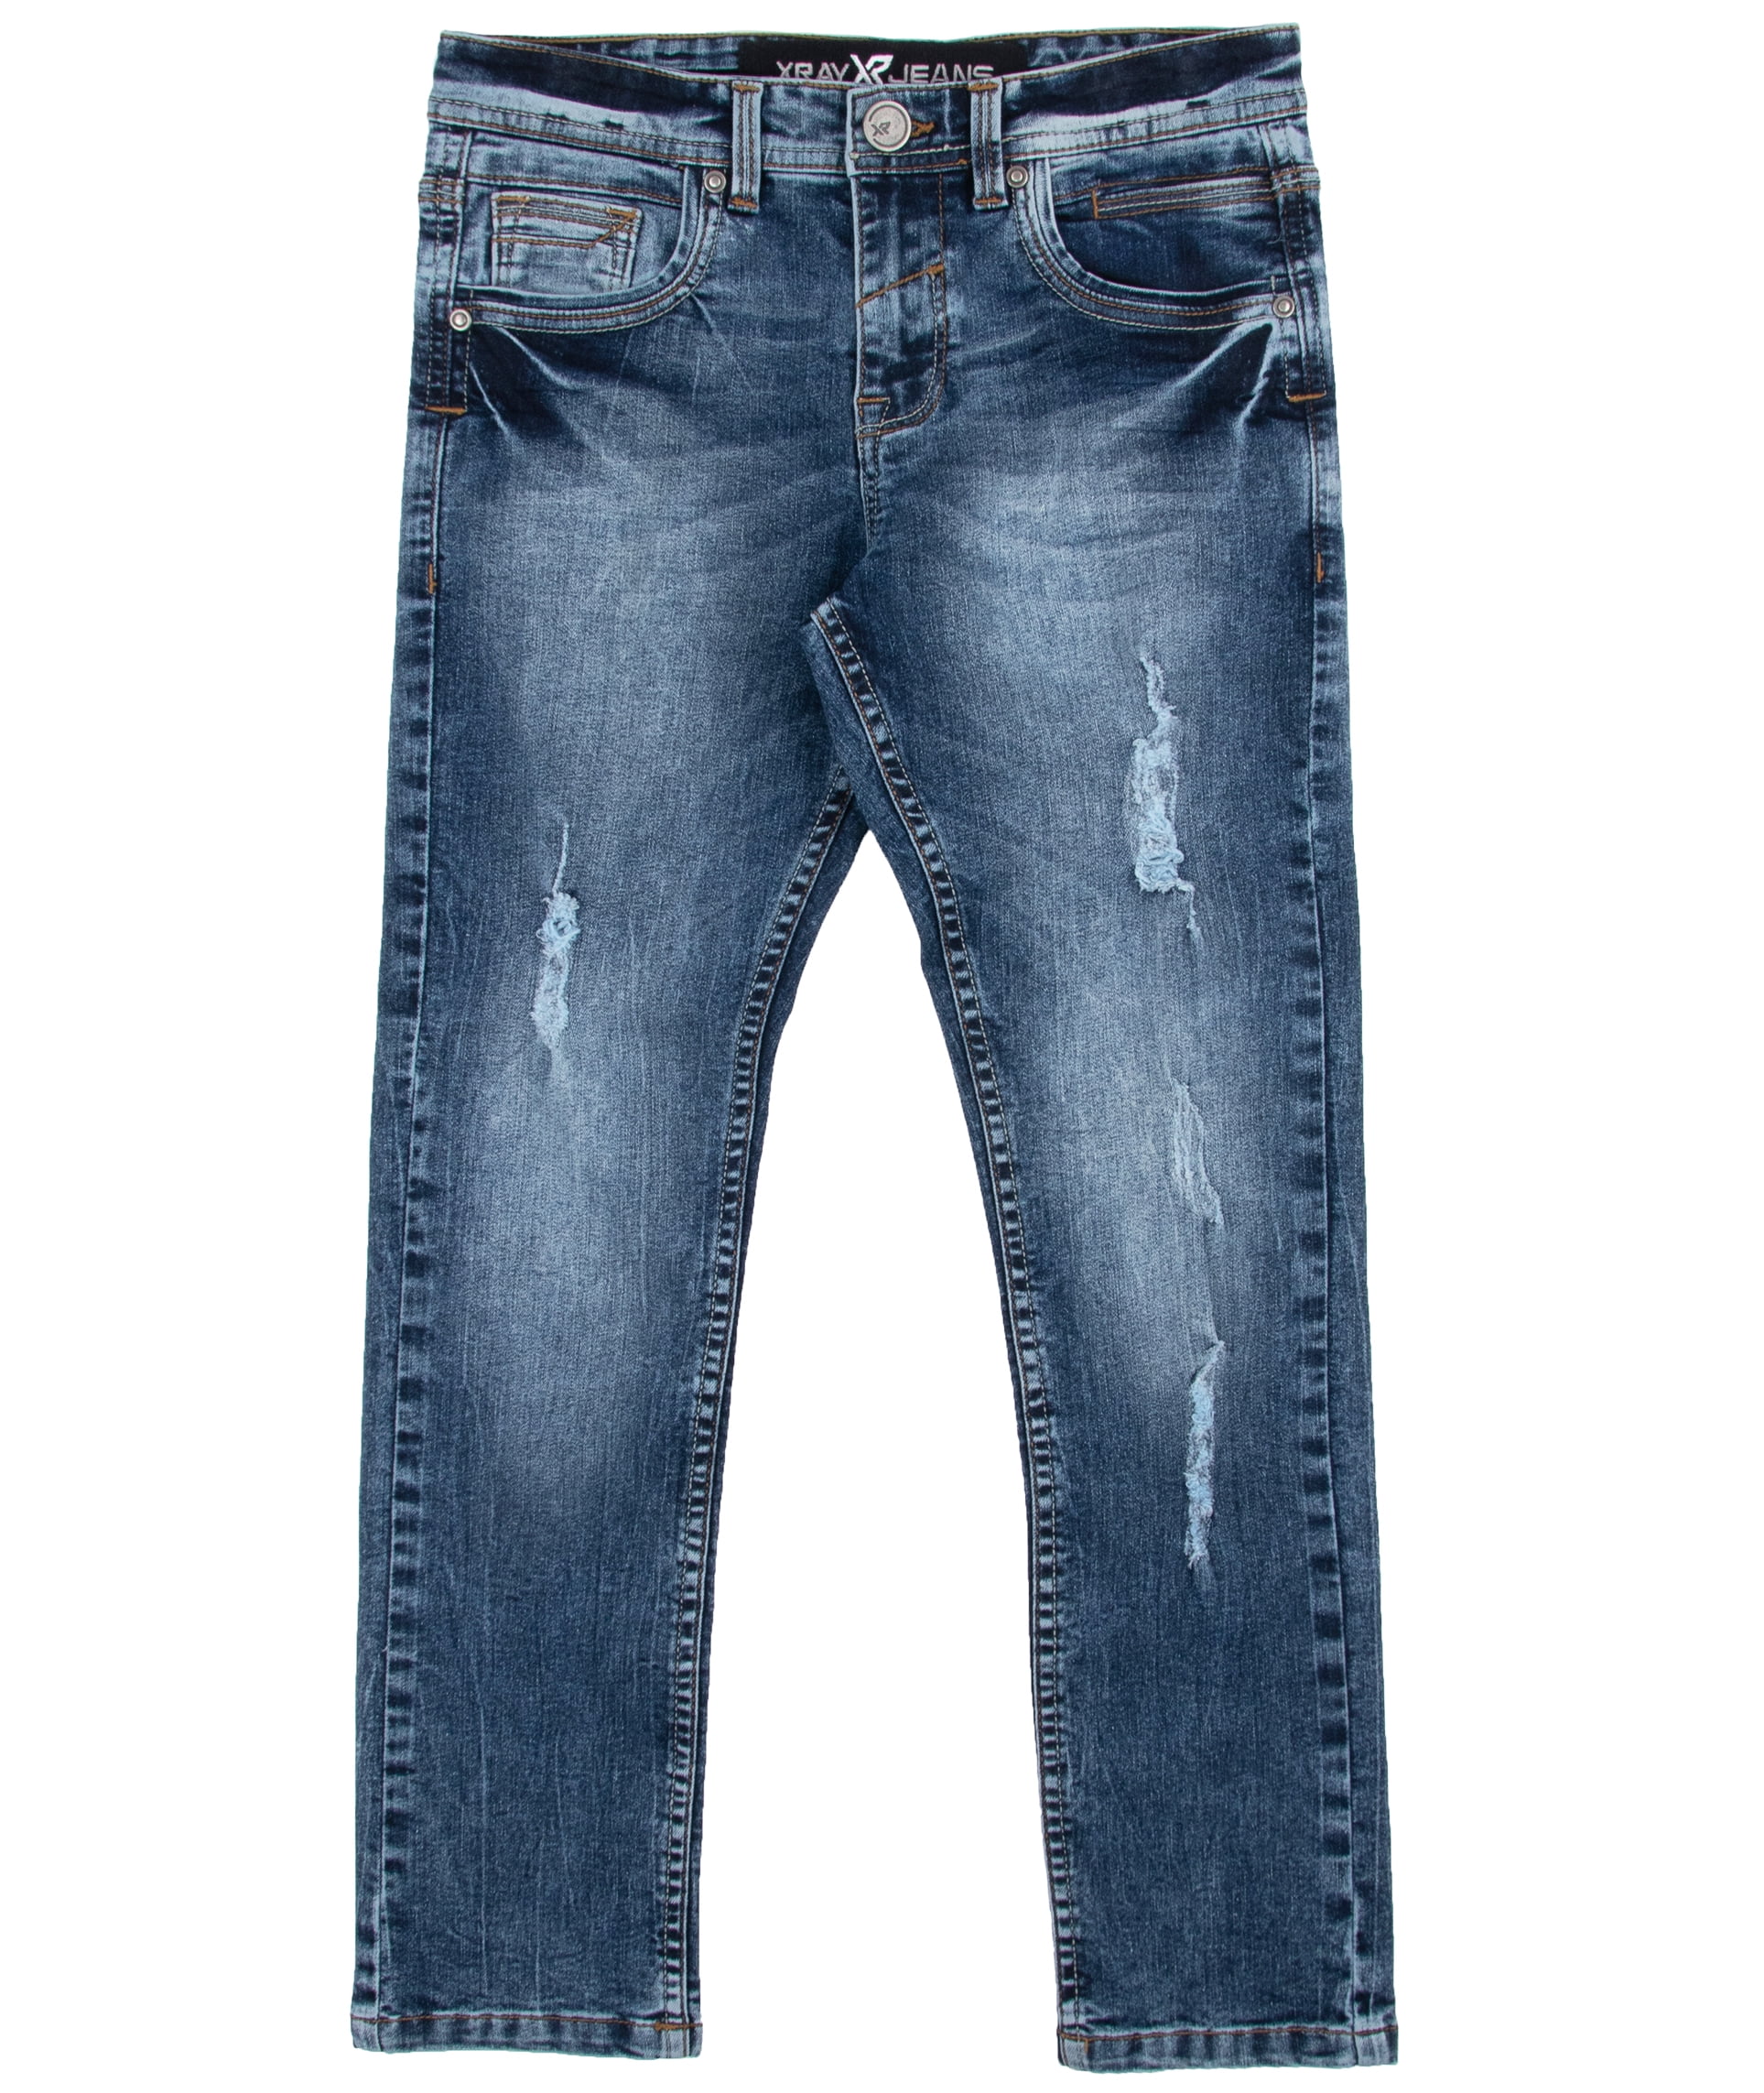 famuka Toddler Kids Boys Jeans Fashion Holes Denim Pants 